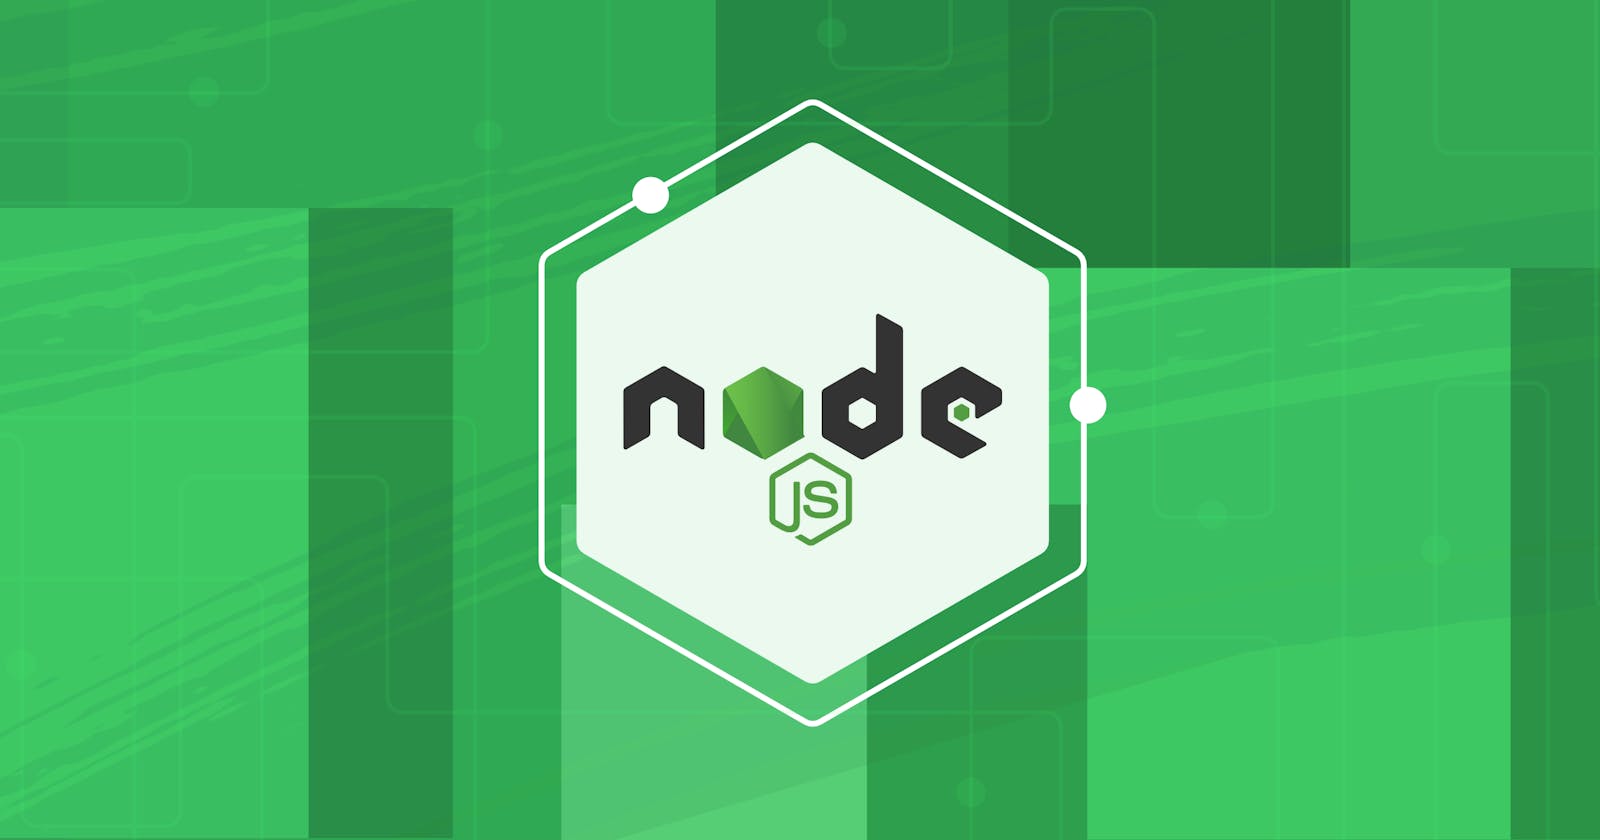 behind the scene of node.js